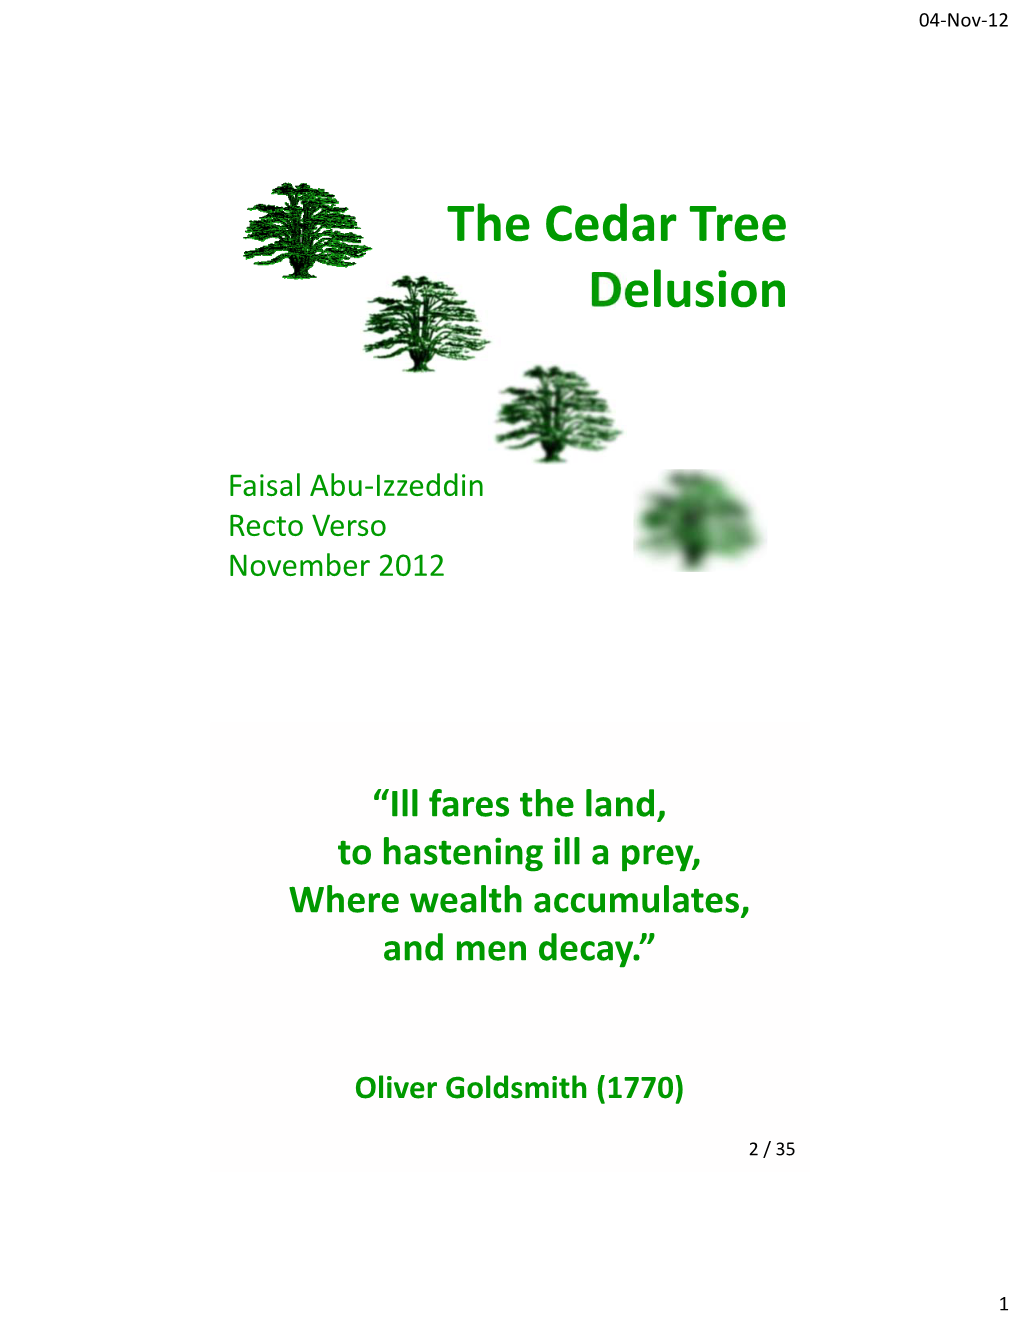 The Cedar Tree Delusion